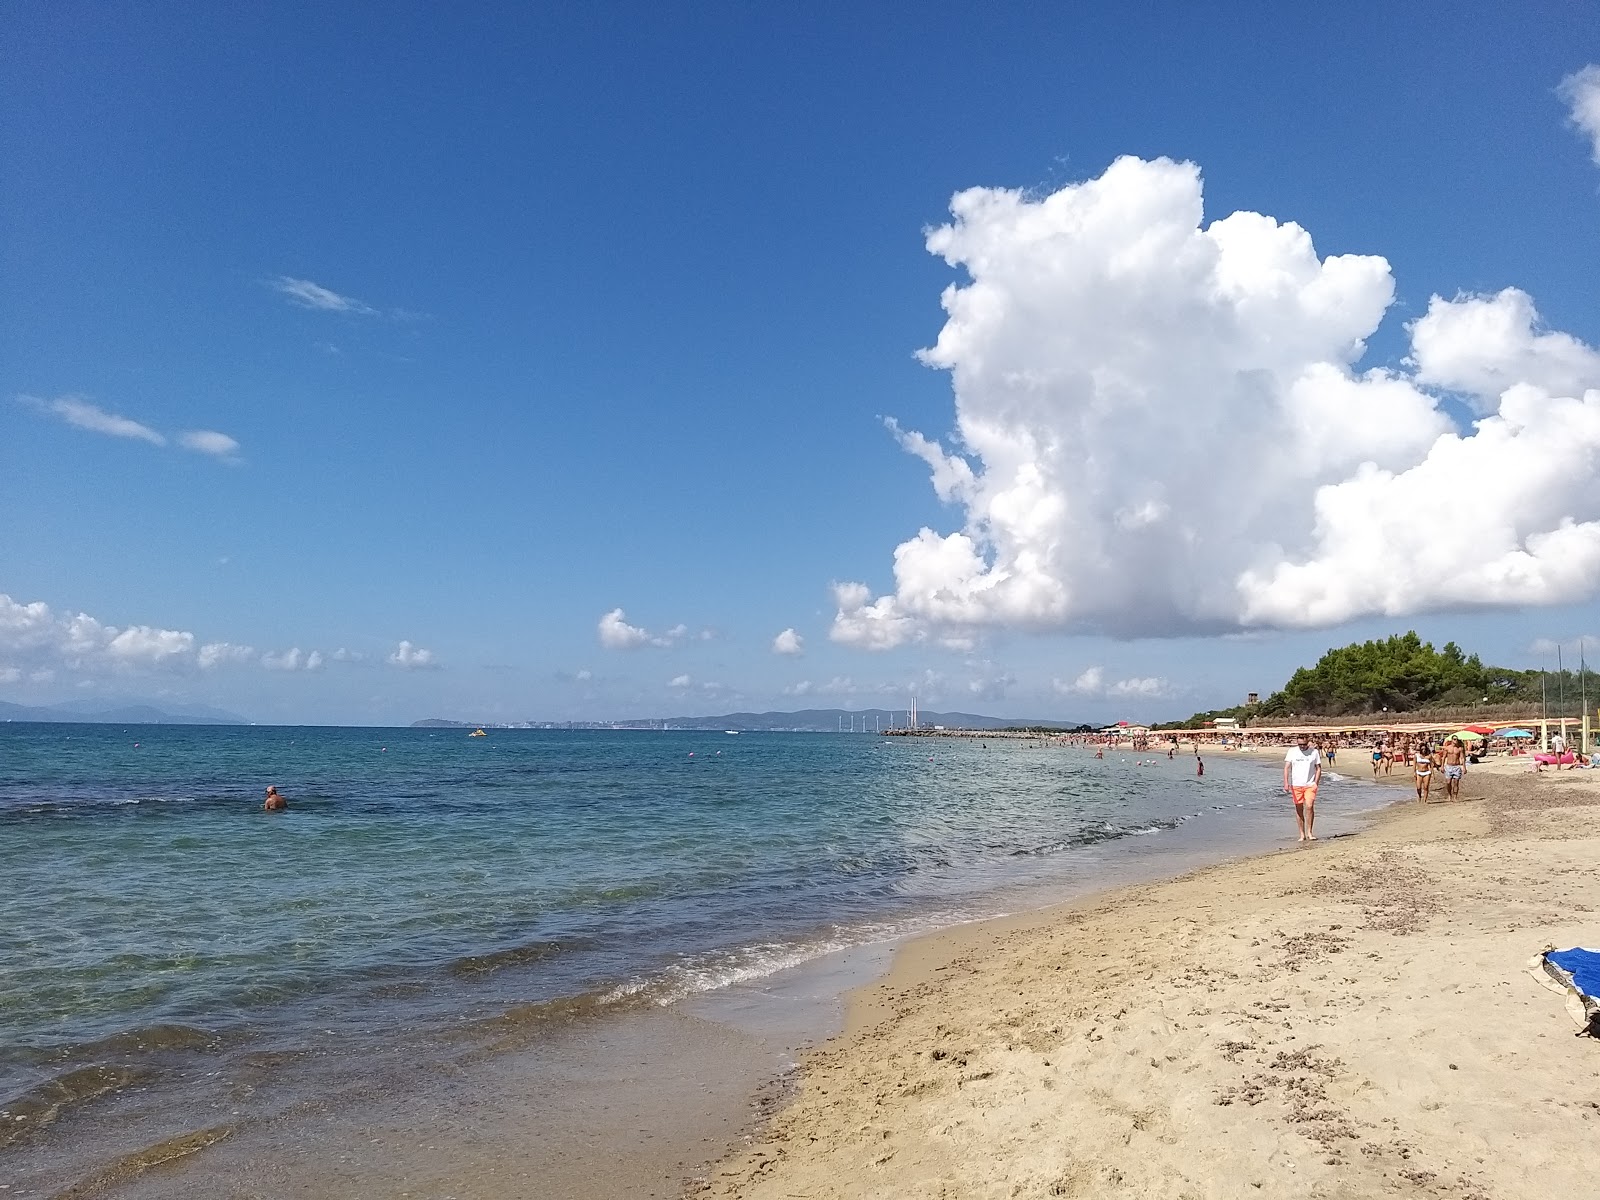 Spiaggia Libera di Torre Mozza'in fotoğrafı geniş plaj ile birlikte